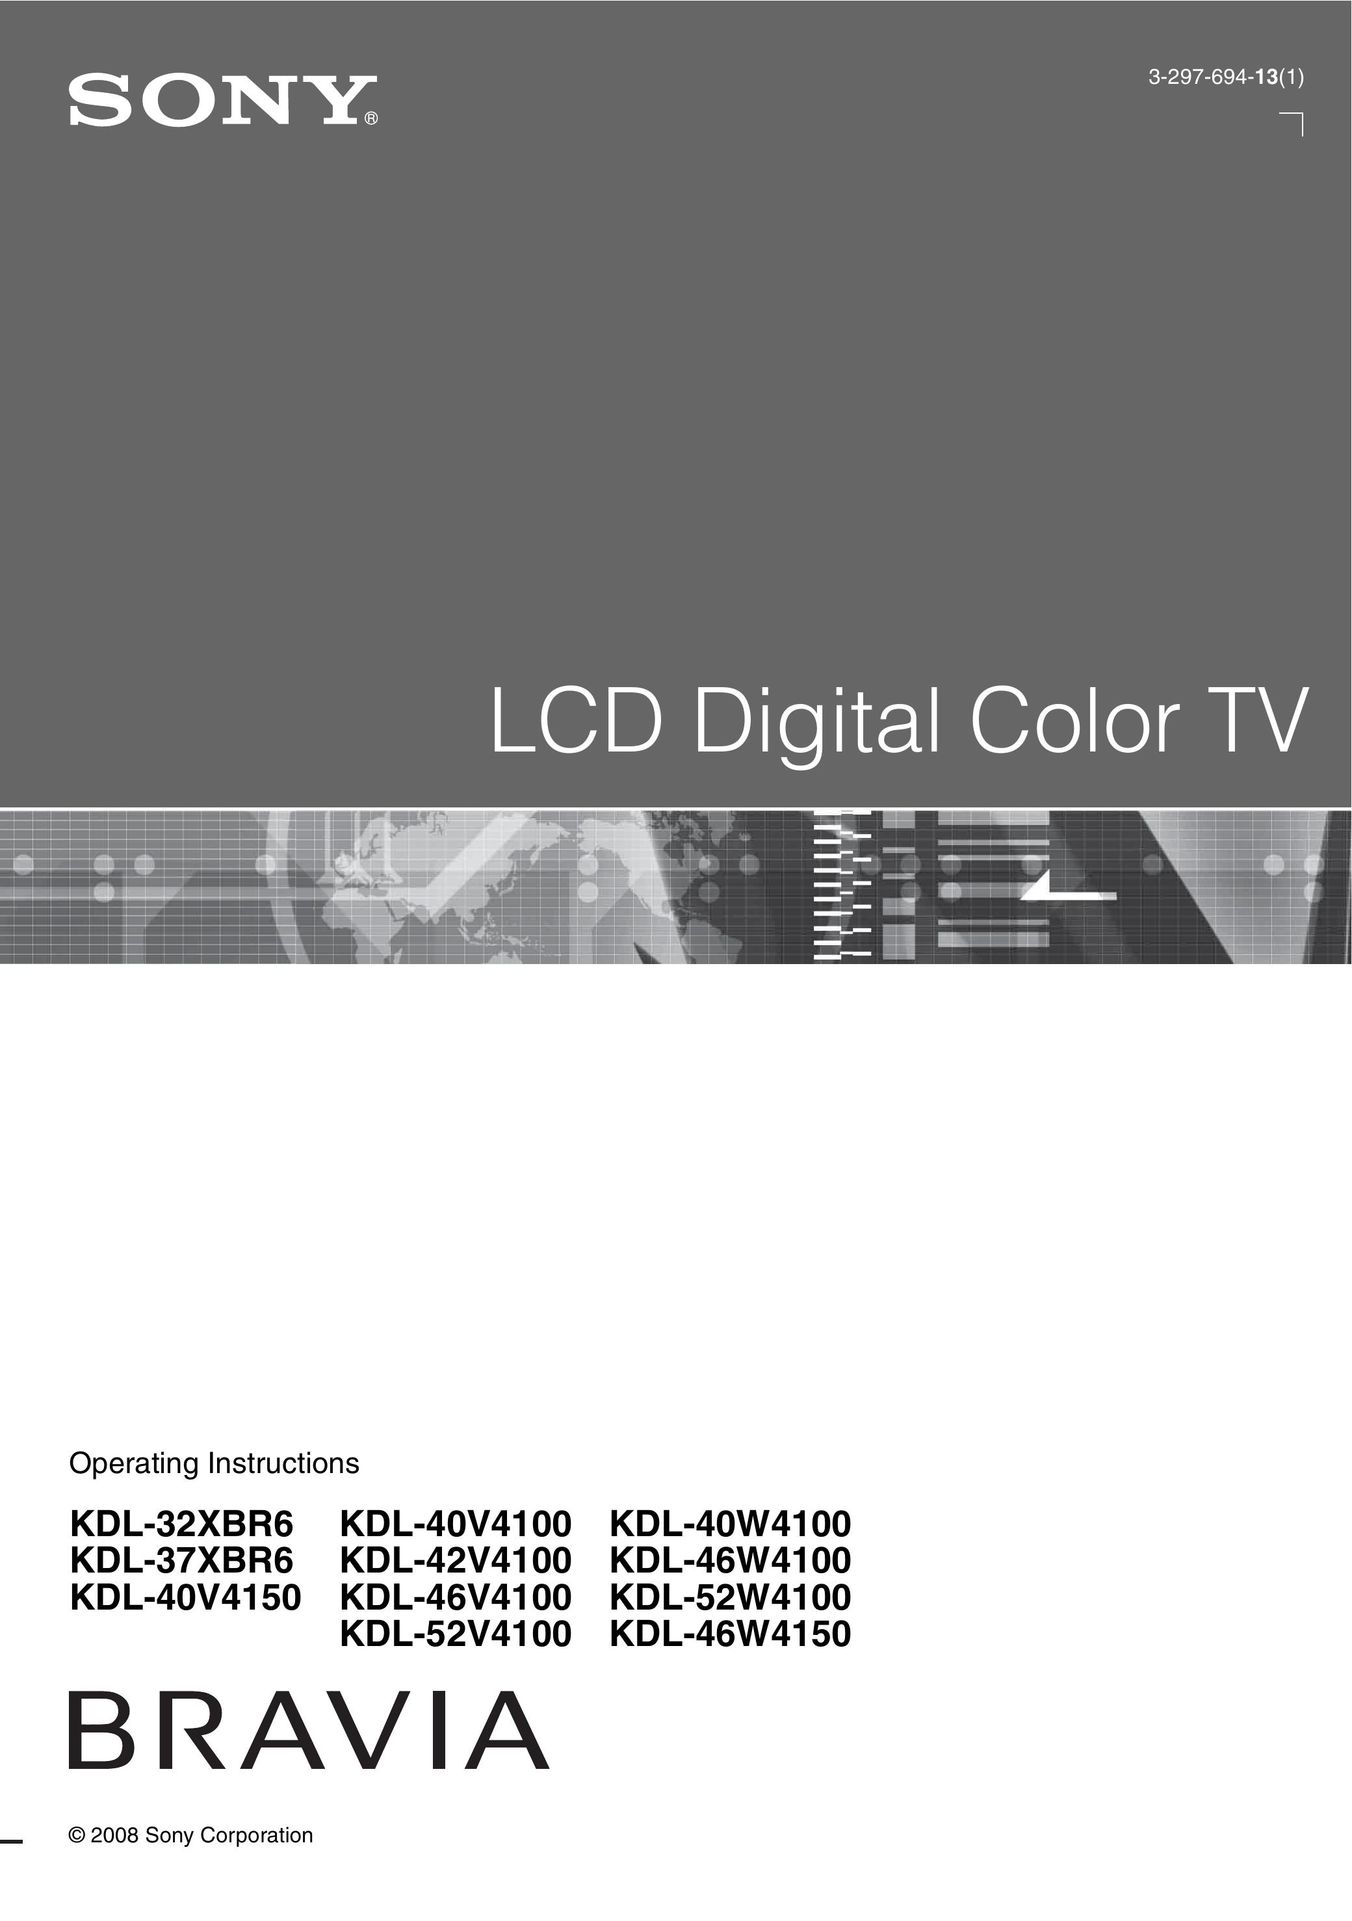 Sony KDL-40V4150 Beverage Dispenser User Manual